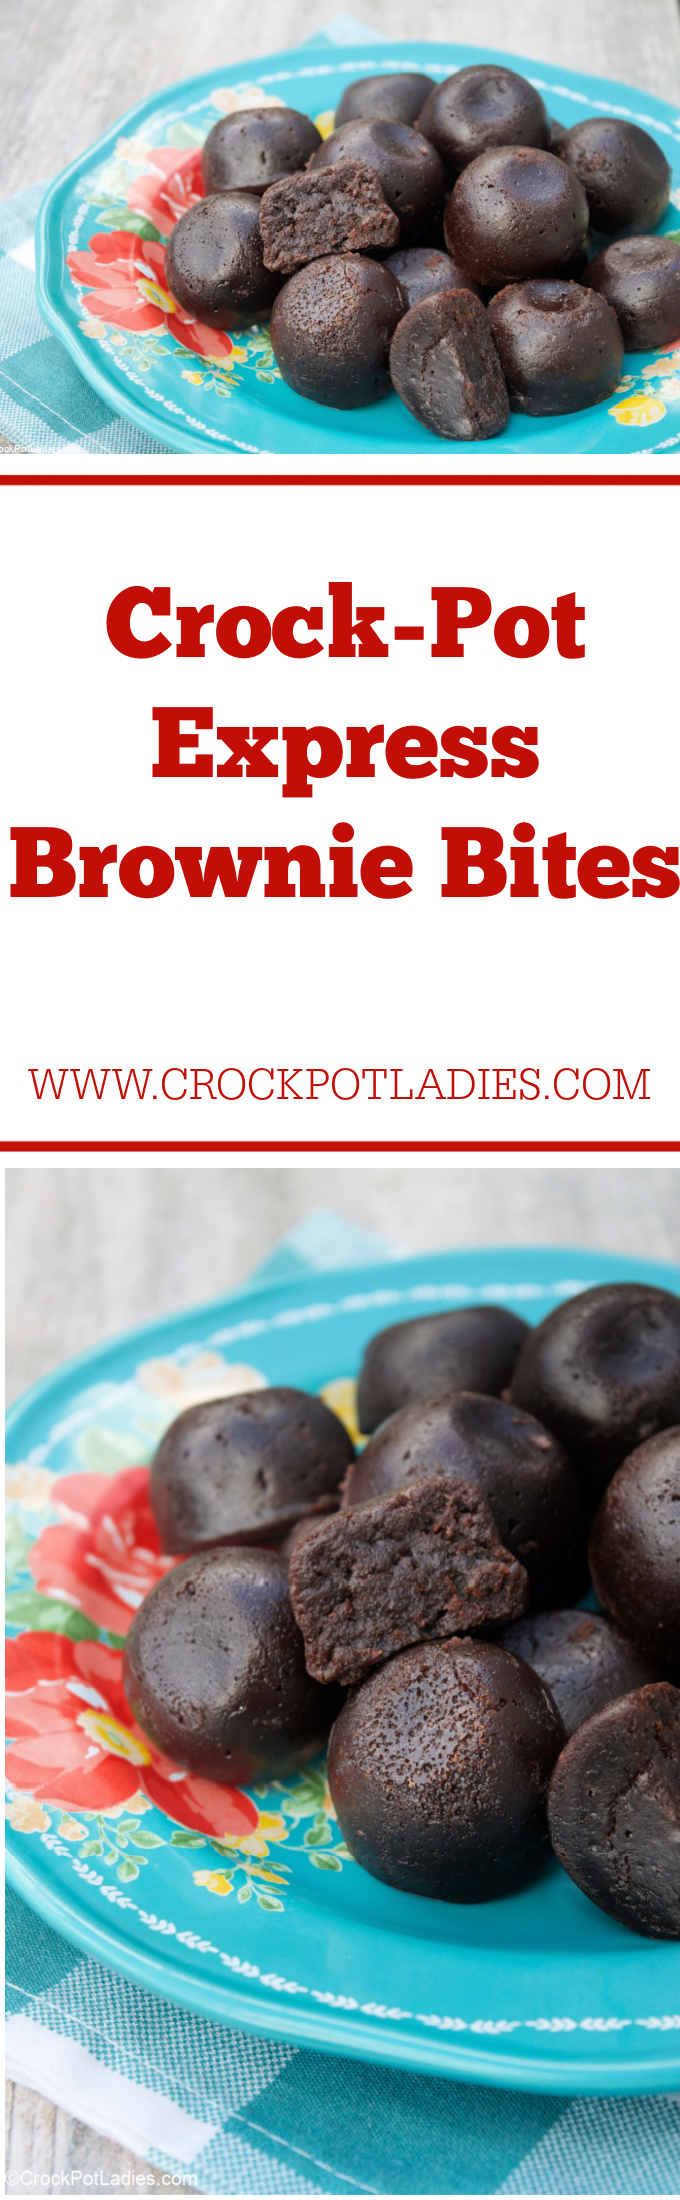 Crock-Pot Express Brownie Bites